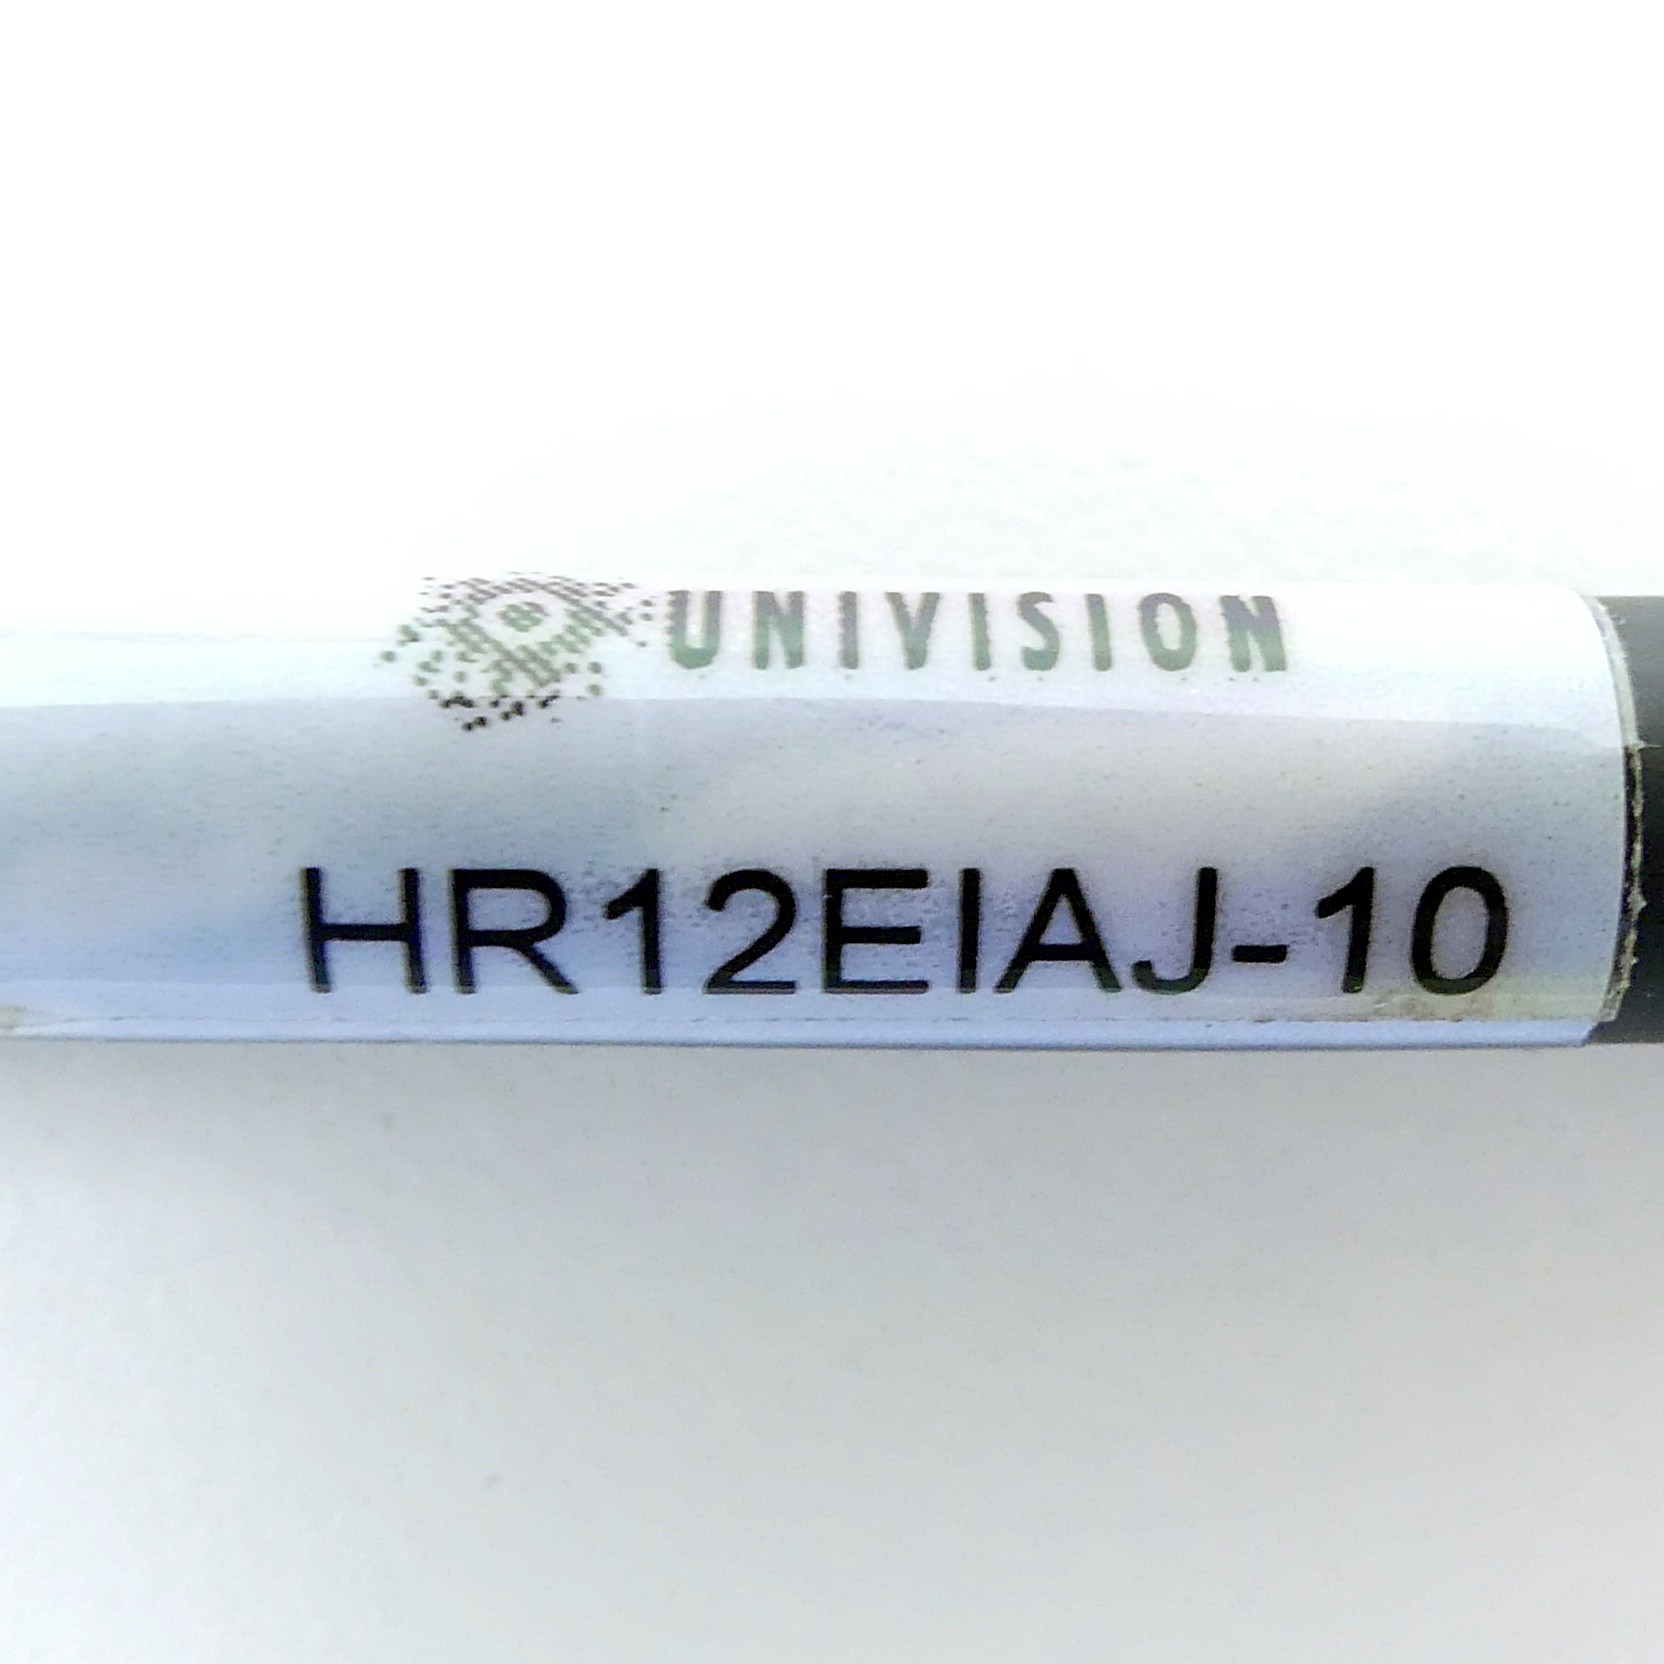 Univision Kamerakabel HR12EIAJ-10 